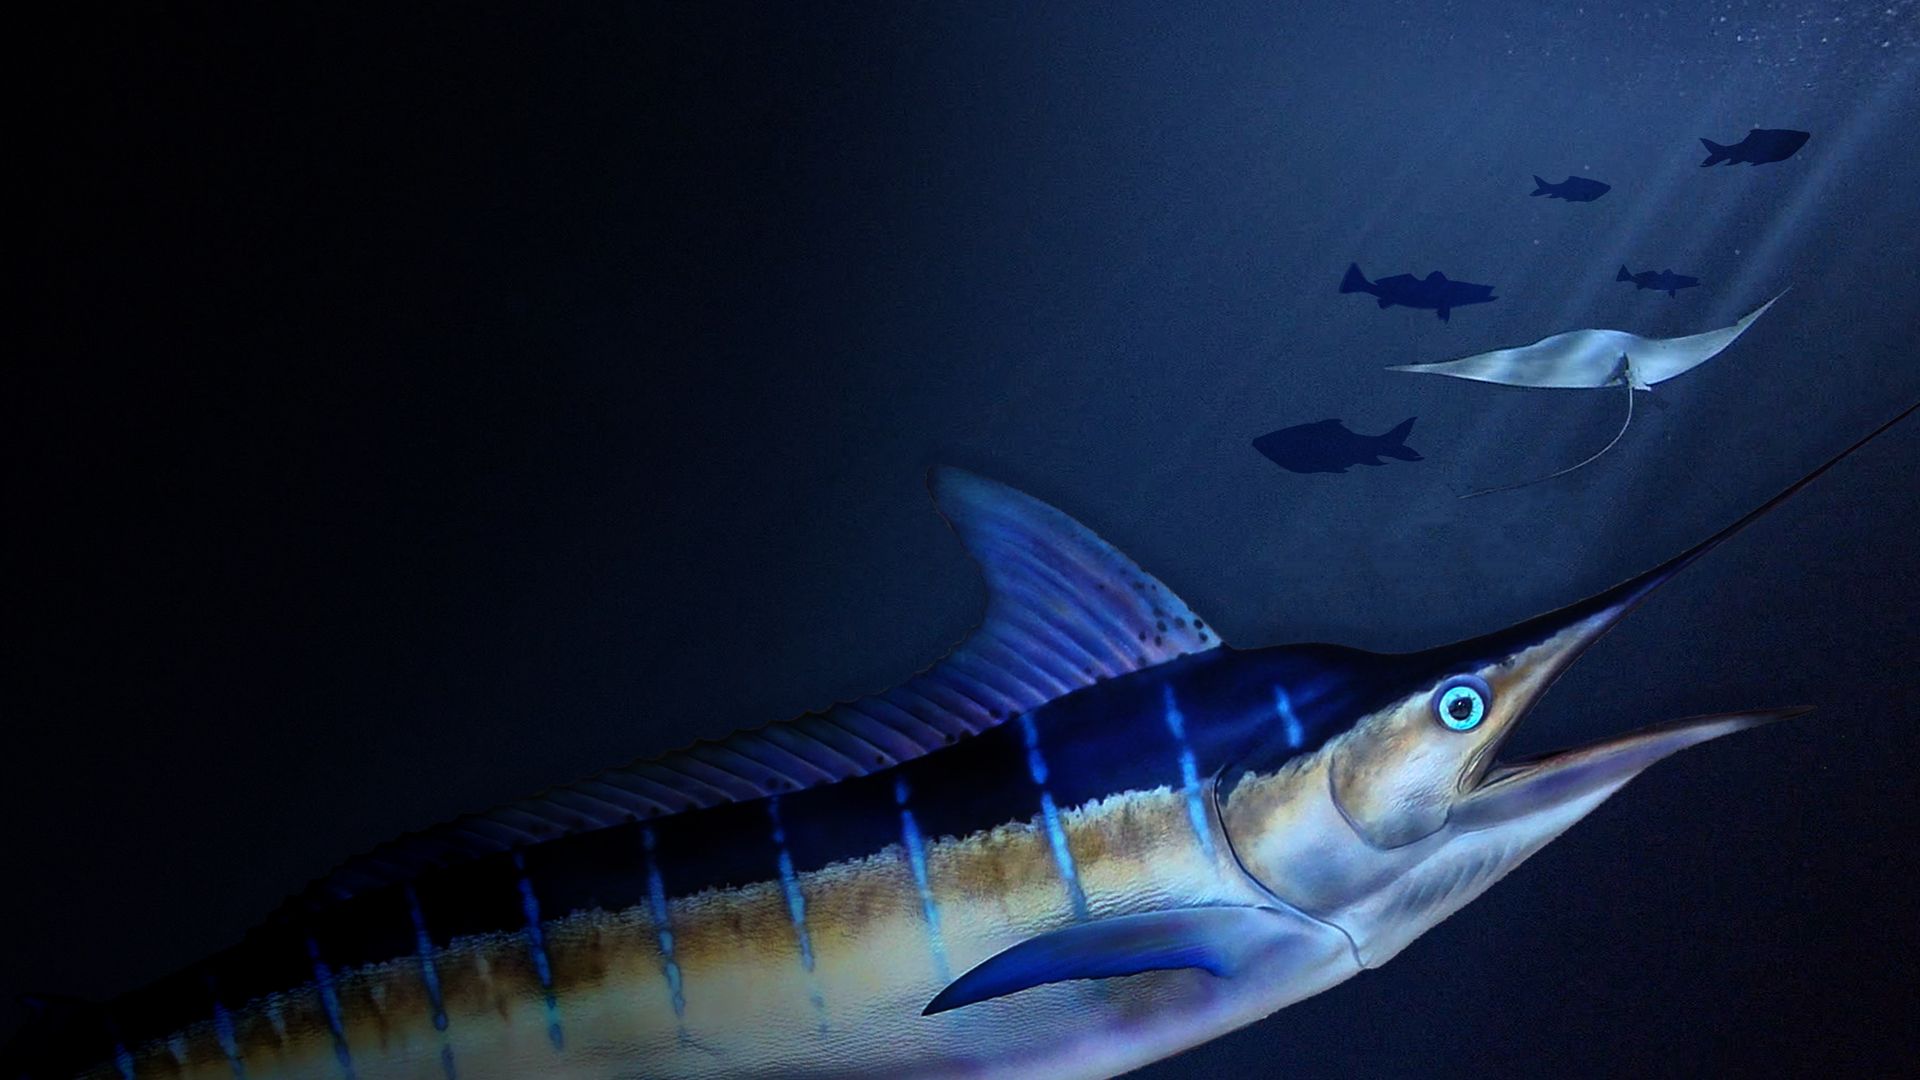 Billfish: Superfish with David Attenborough - Trailer